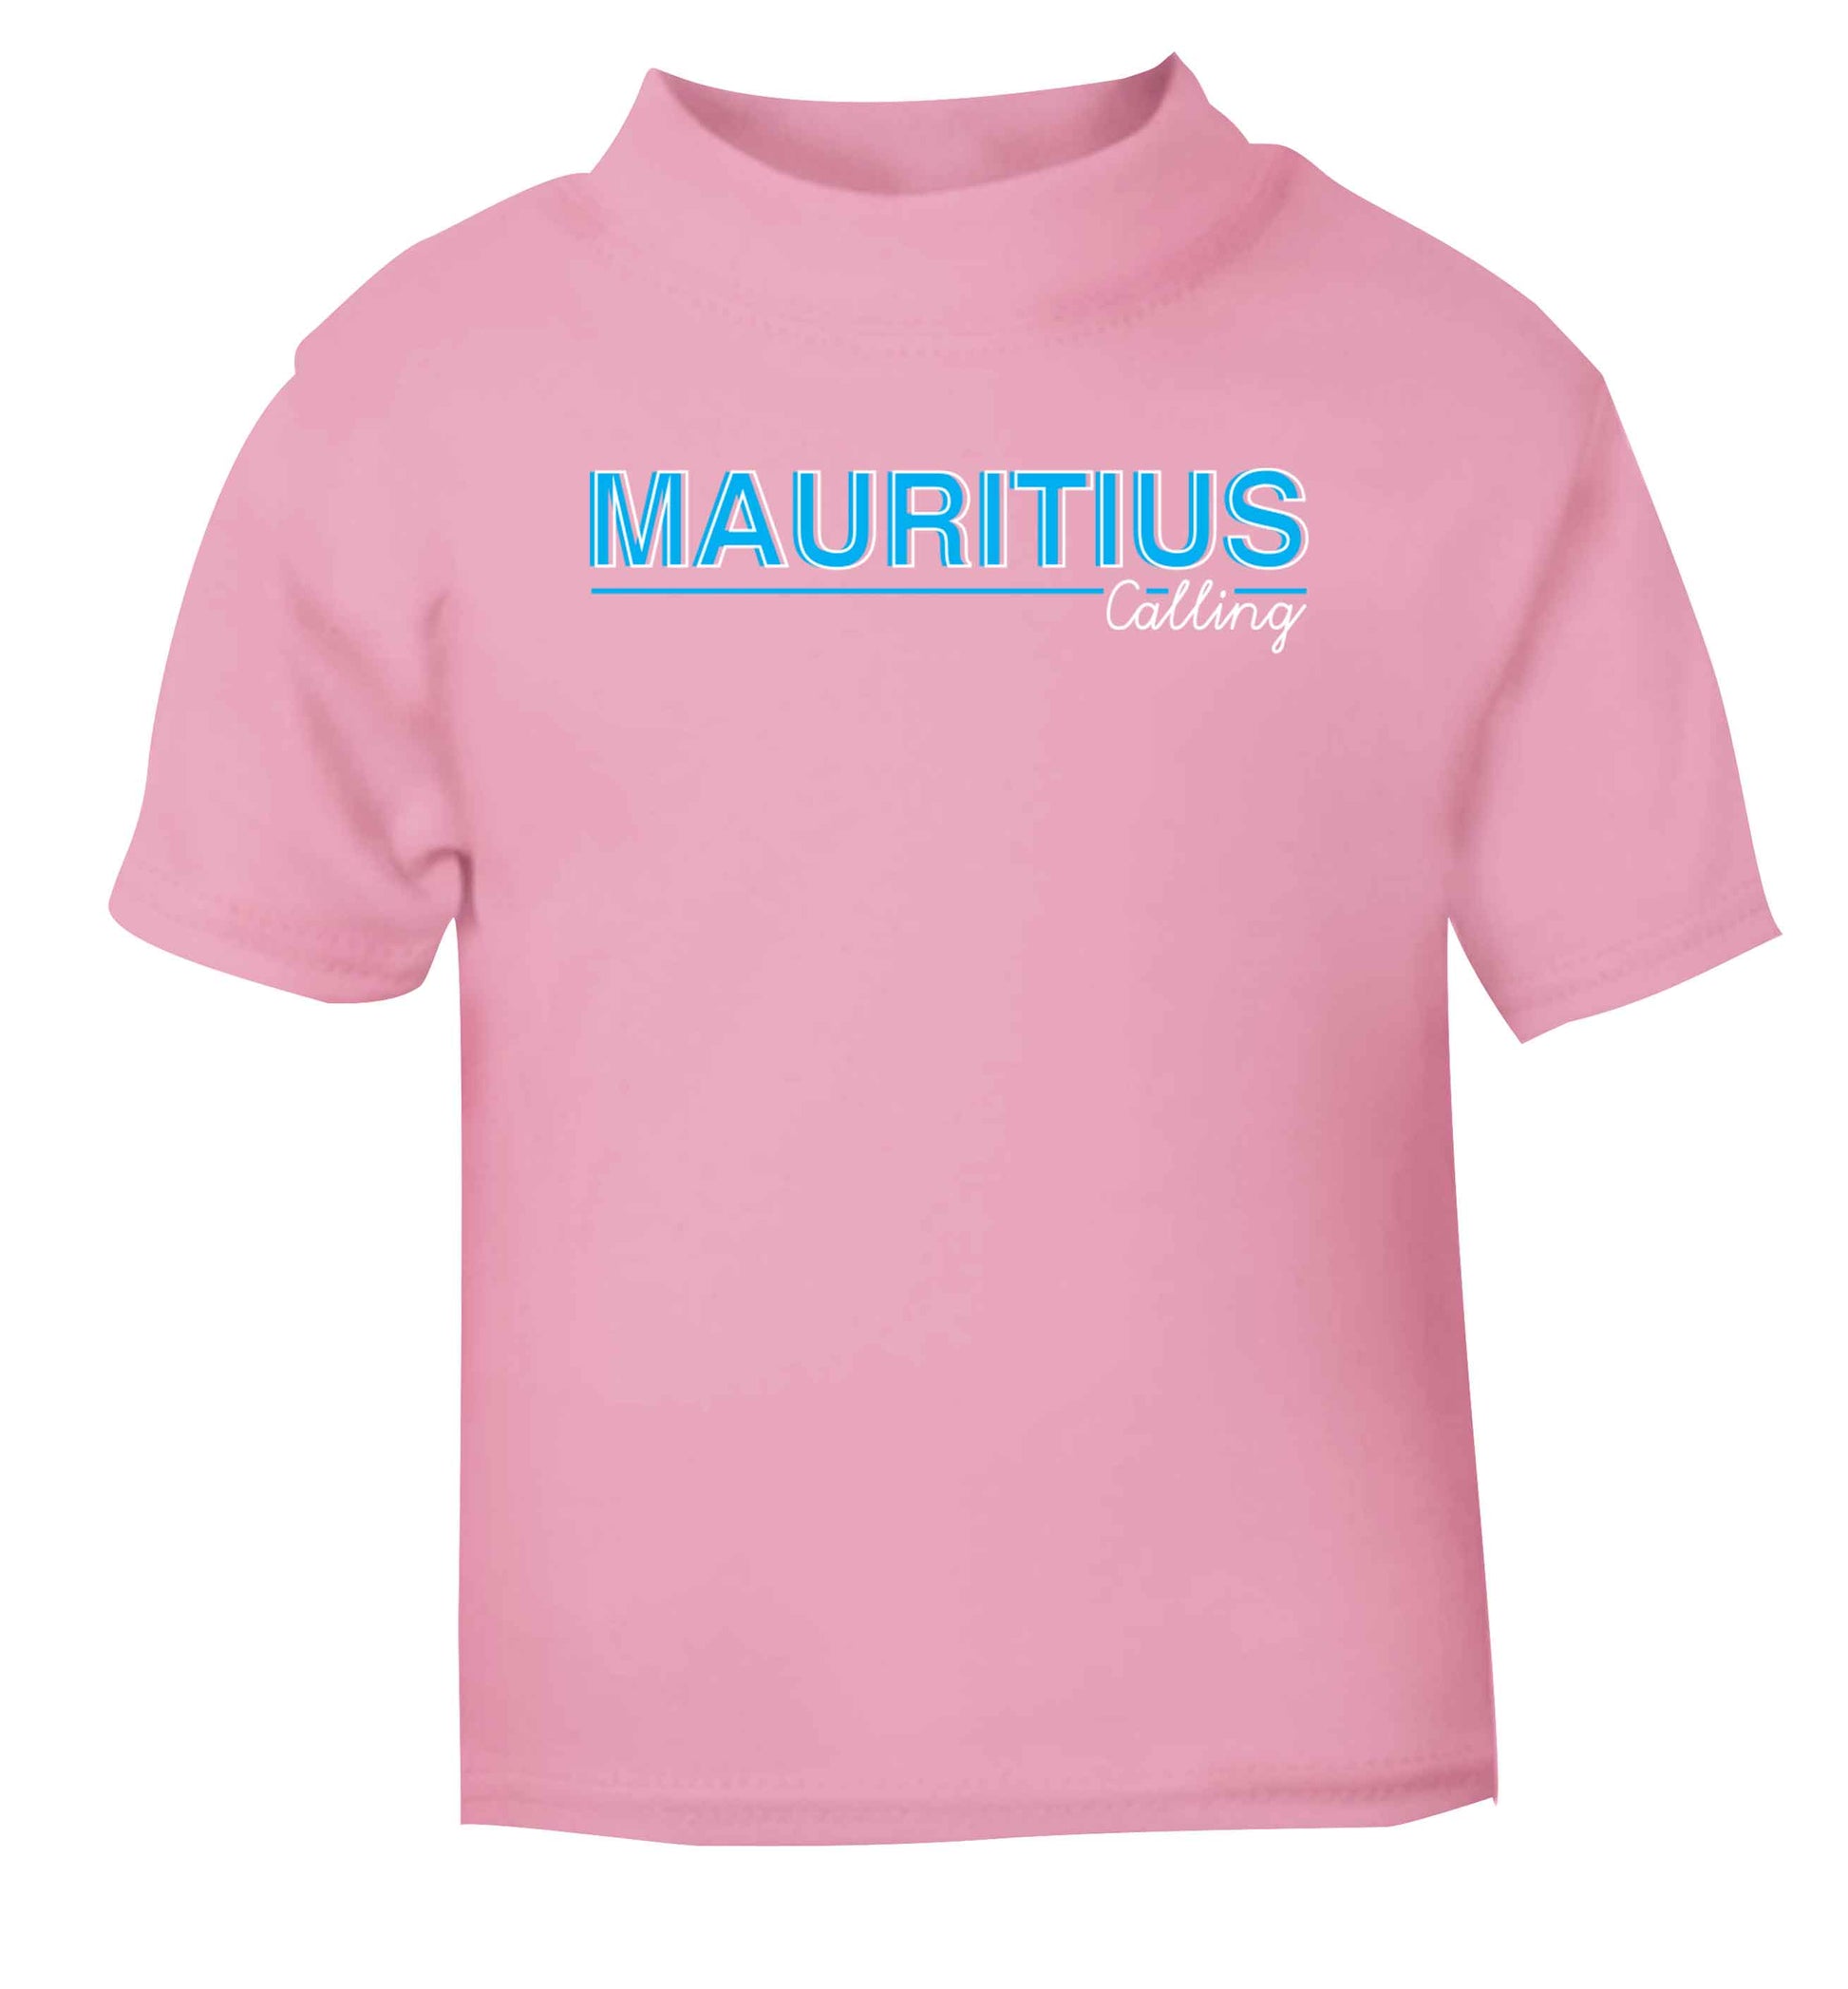 Mauritius calling light pink Baby Toddler Tshirt 2 Years